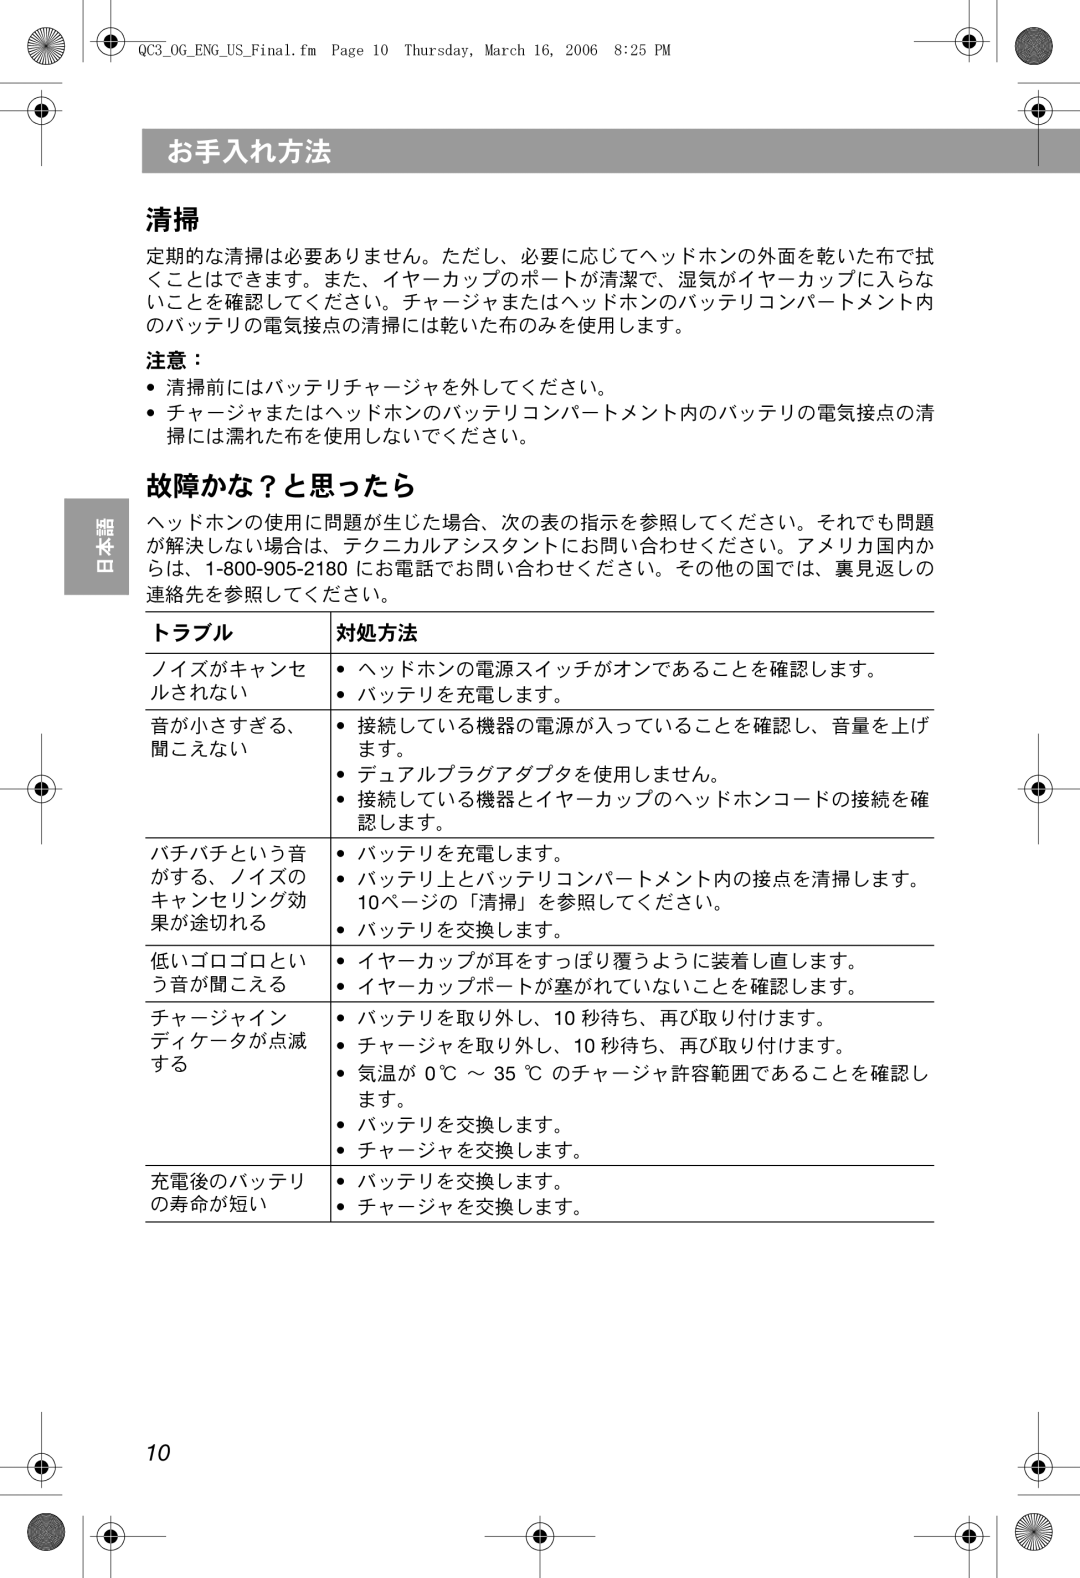 Bose QuietComfort 3 manual 故障かな？と思ったら, トラブル, 対処方法, お手入れ方法, Arabic Tr. Chinese S. Chinese Korean Thai 